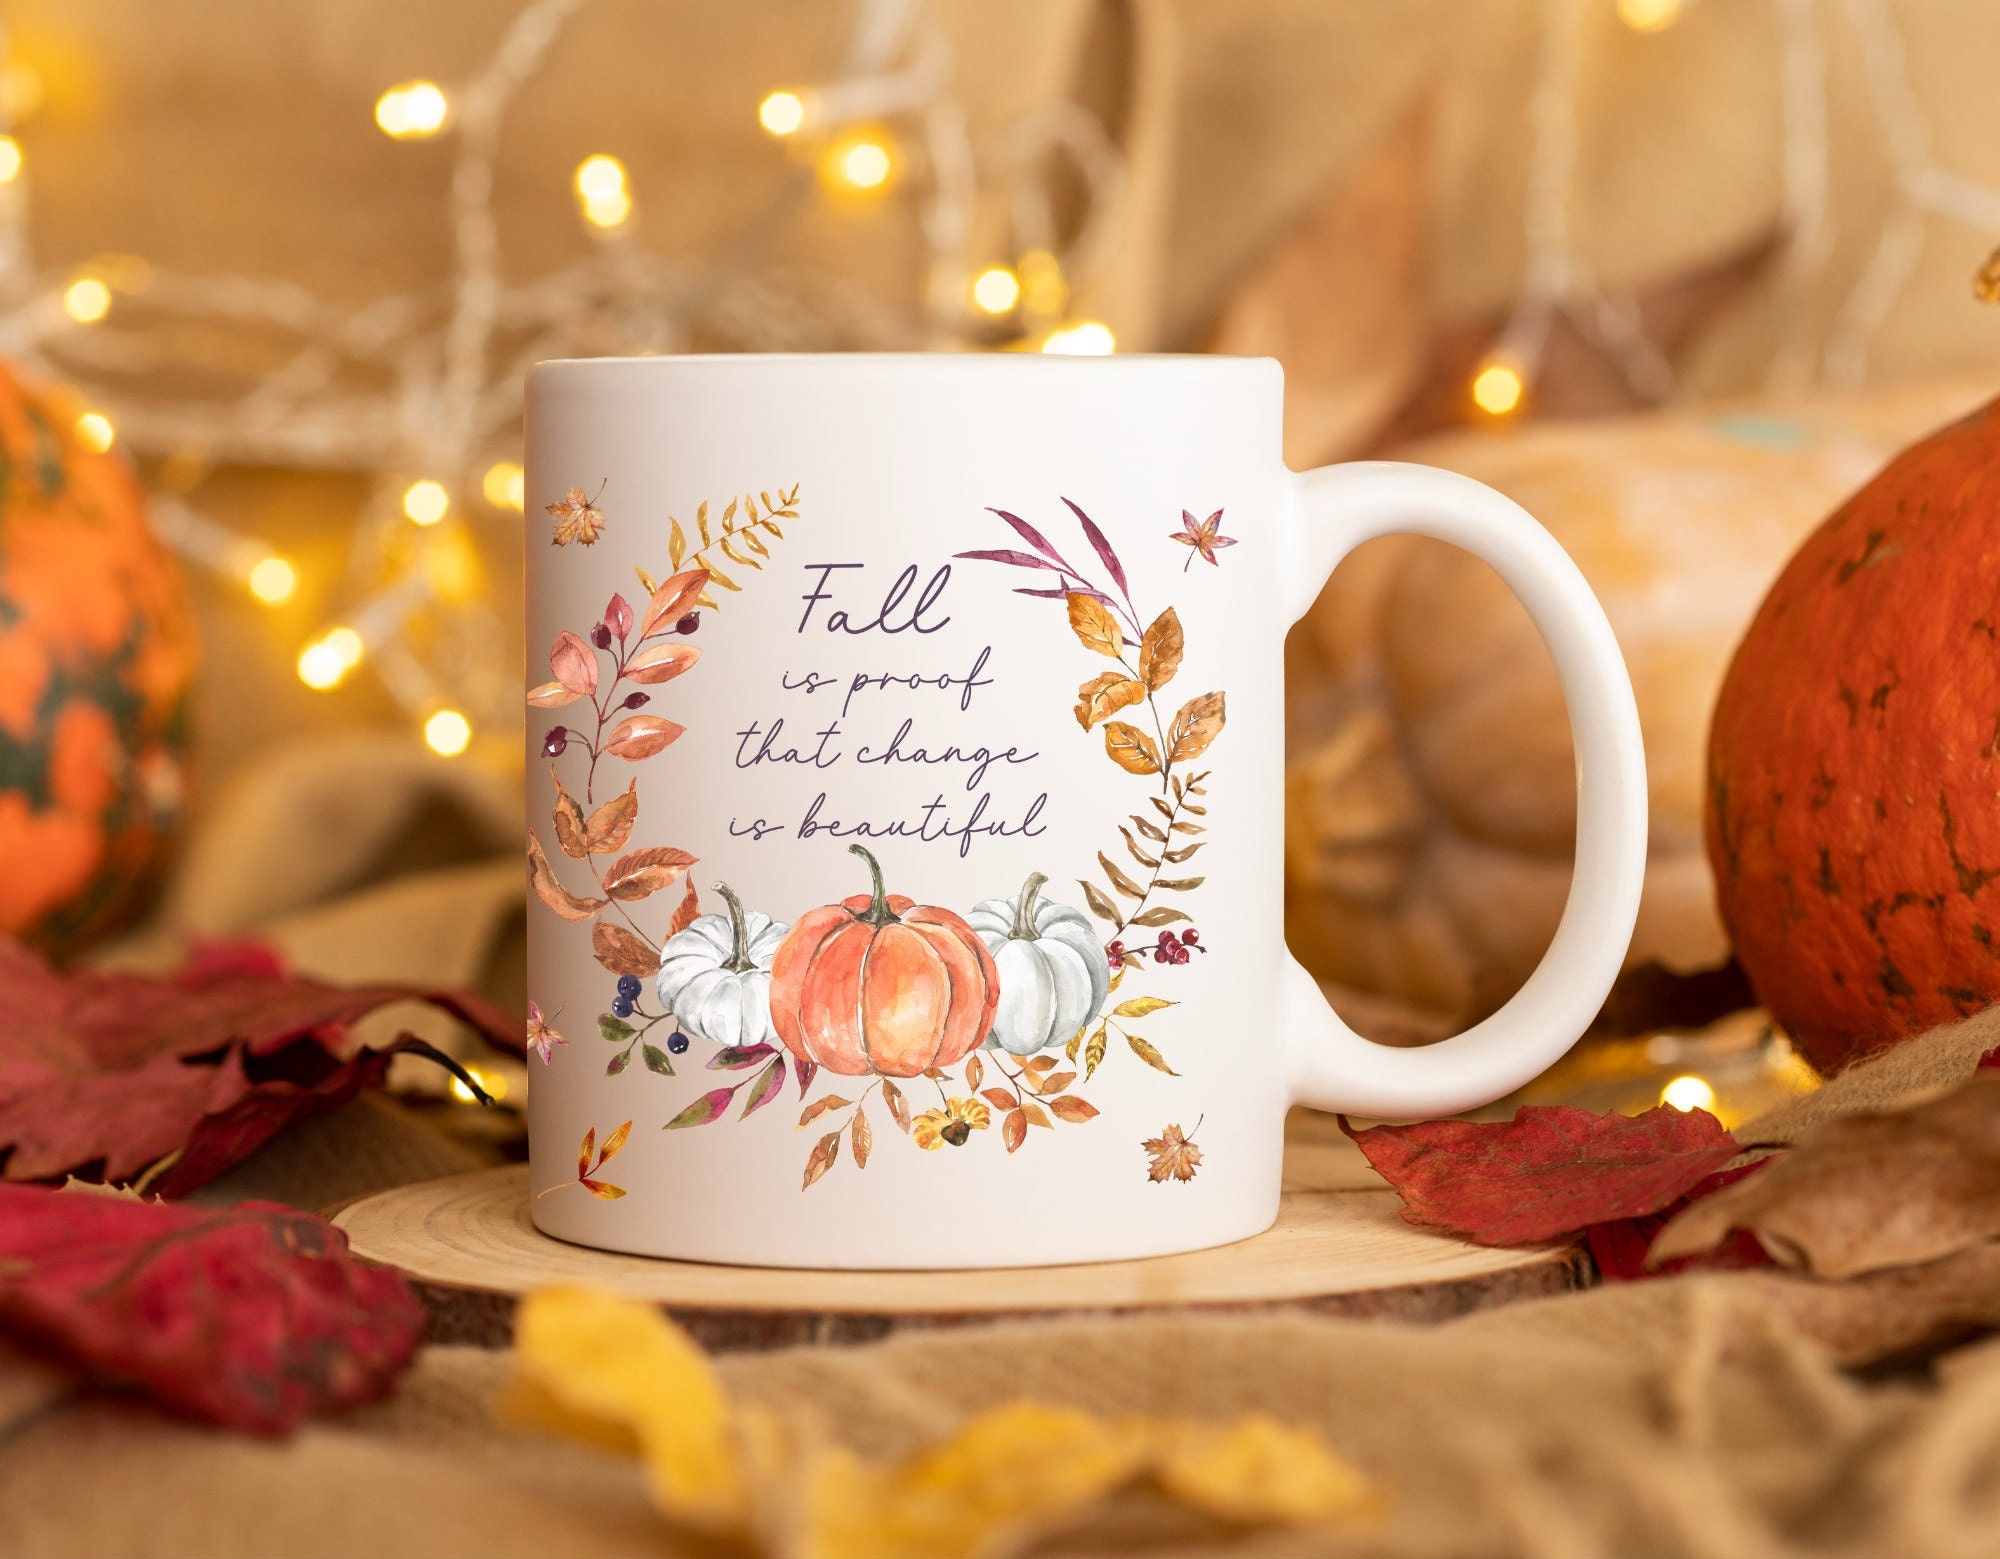 Elegant Fall Gold Orange Black Leaves Collection Coffee Mug by